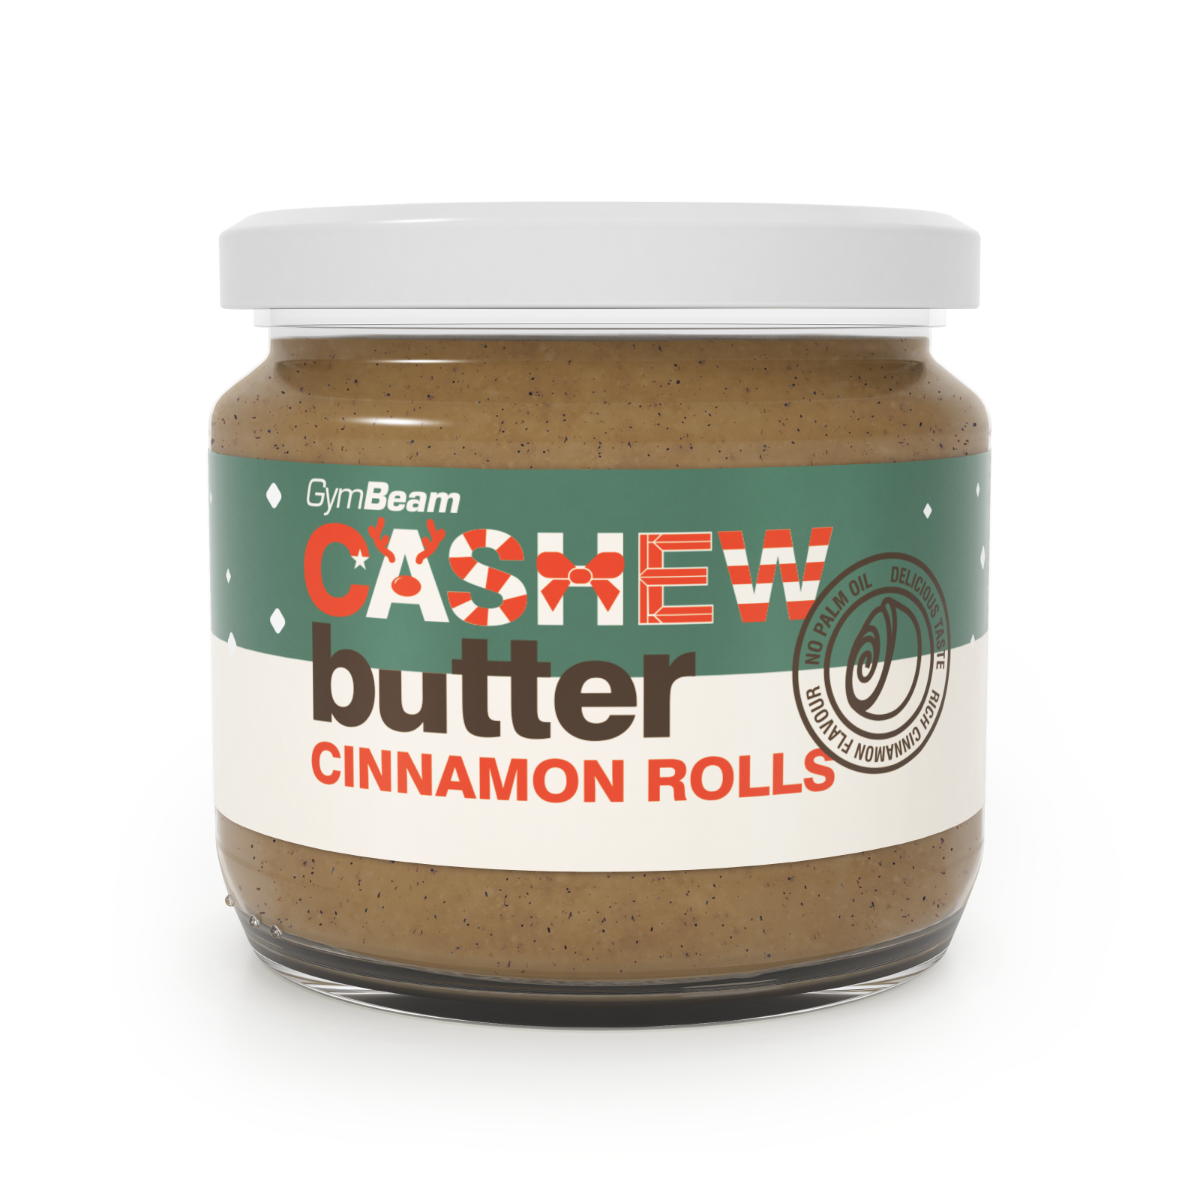 Kešu maslo - Cinnamon rolls - GymBeam 340 g